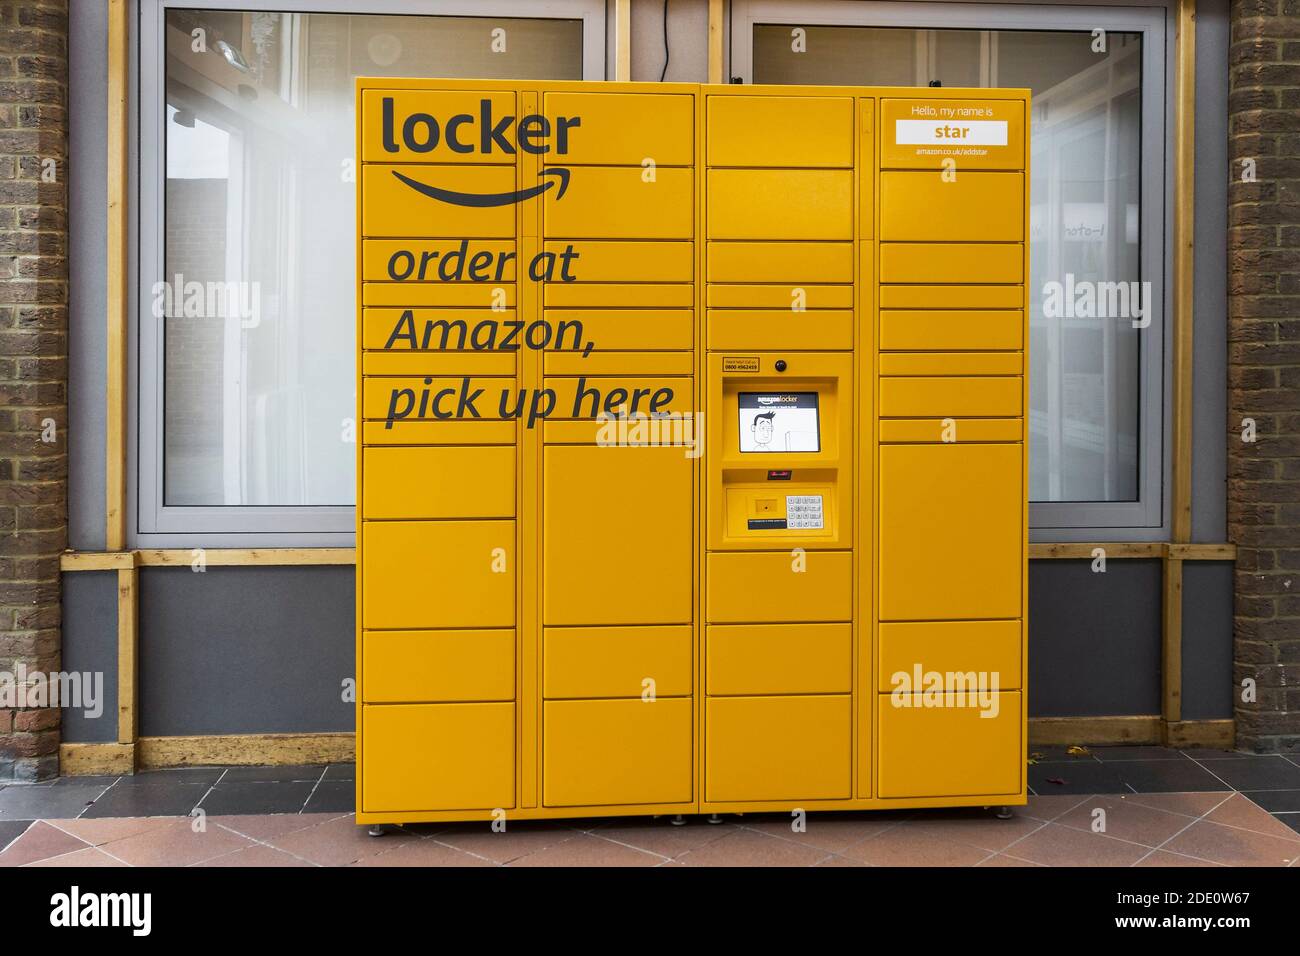 Amazon lockers in a Cramlington shopping centre, UK Stock Photo